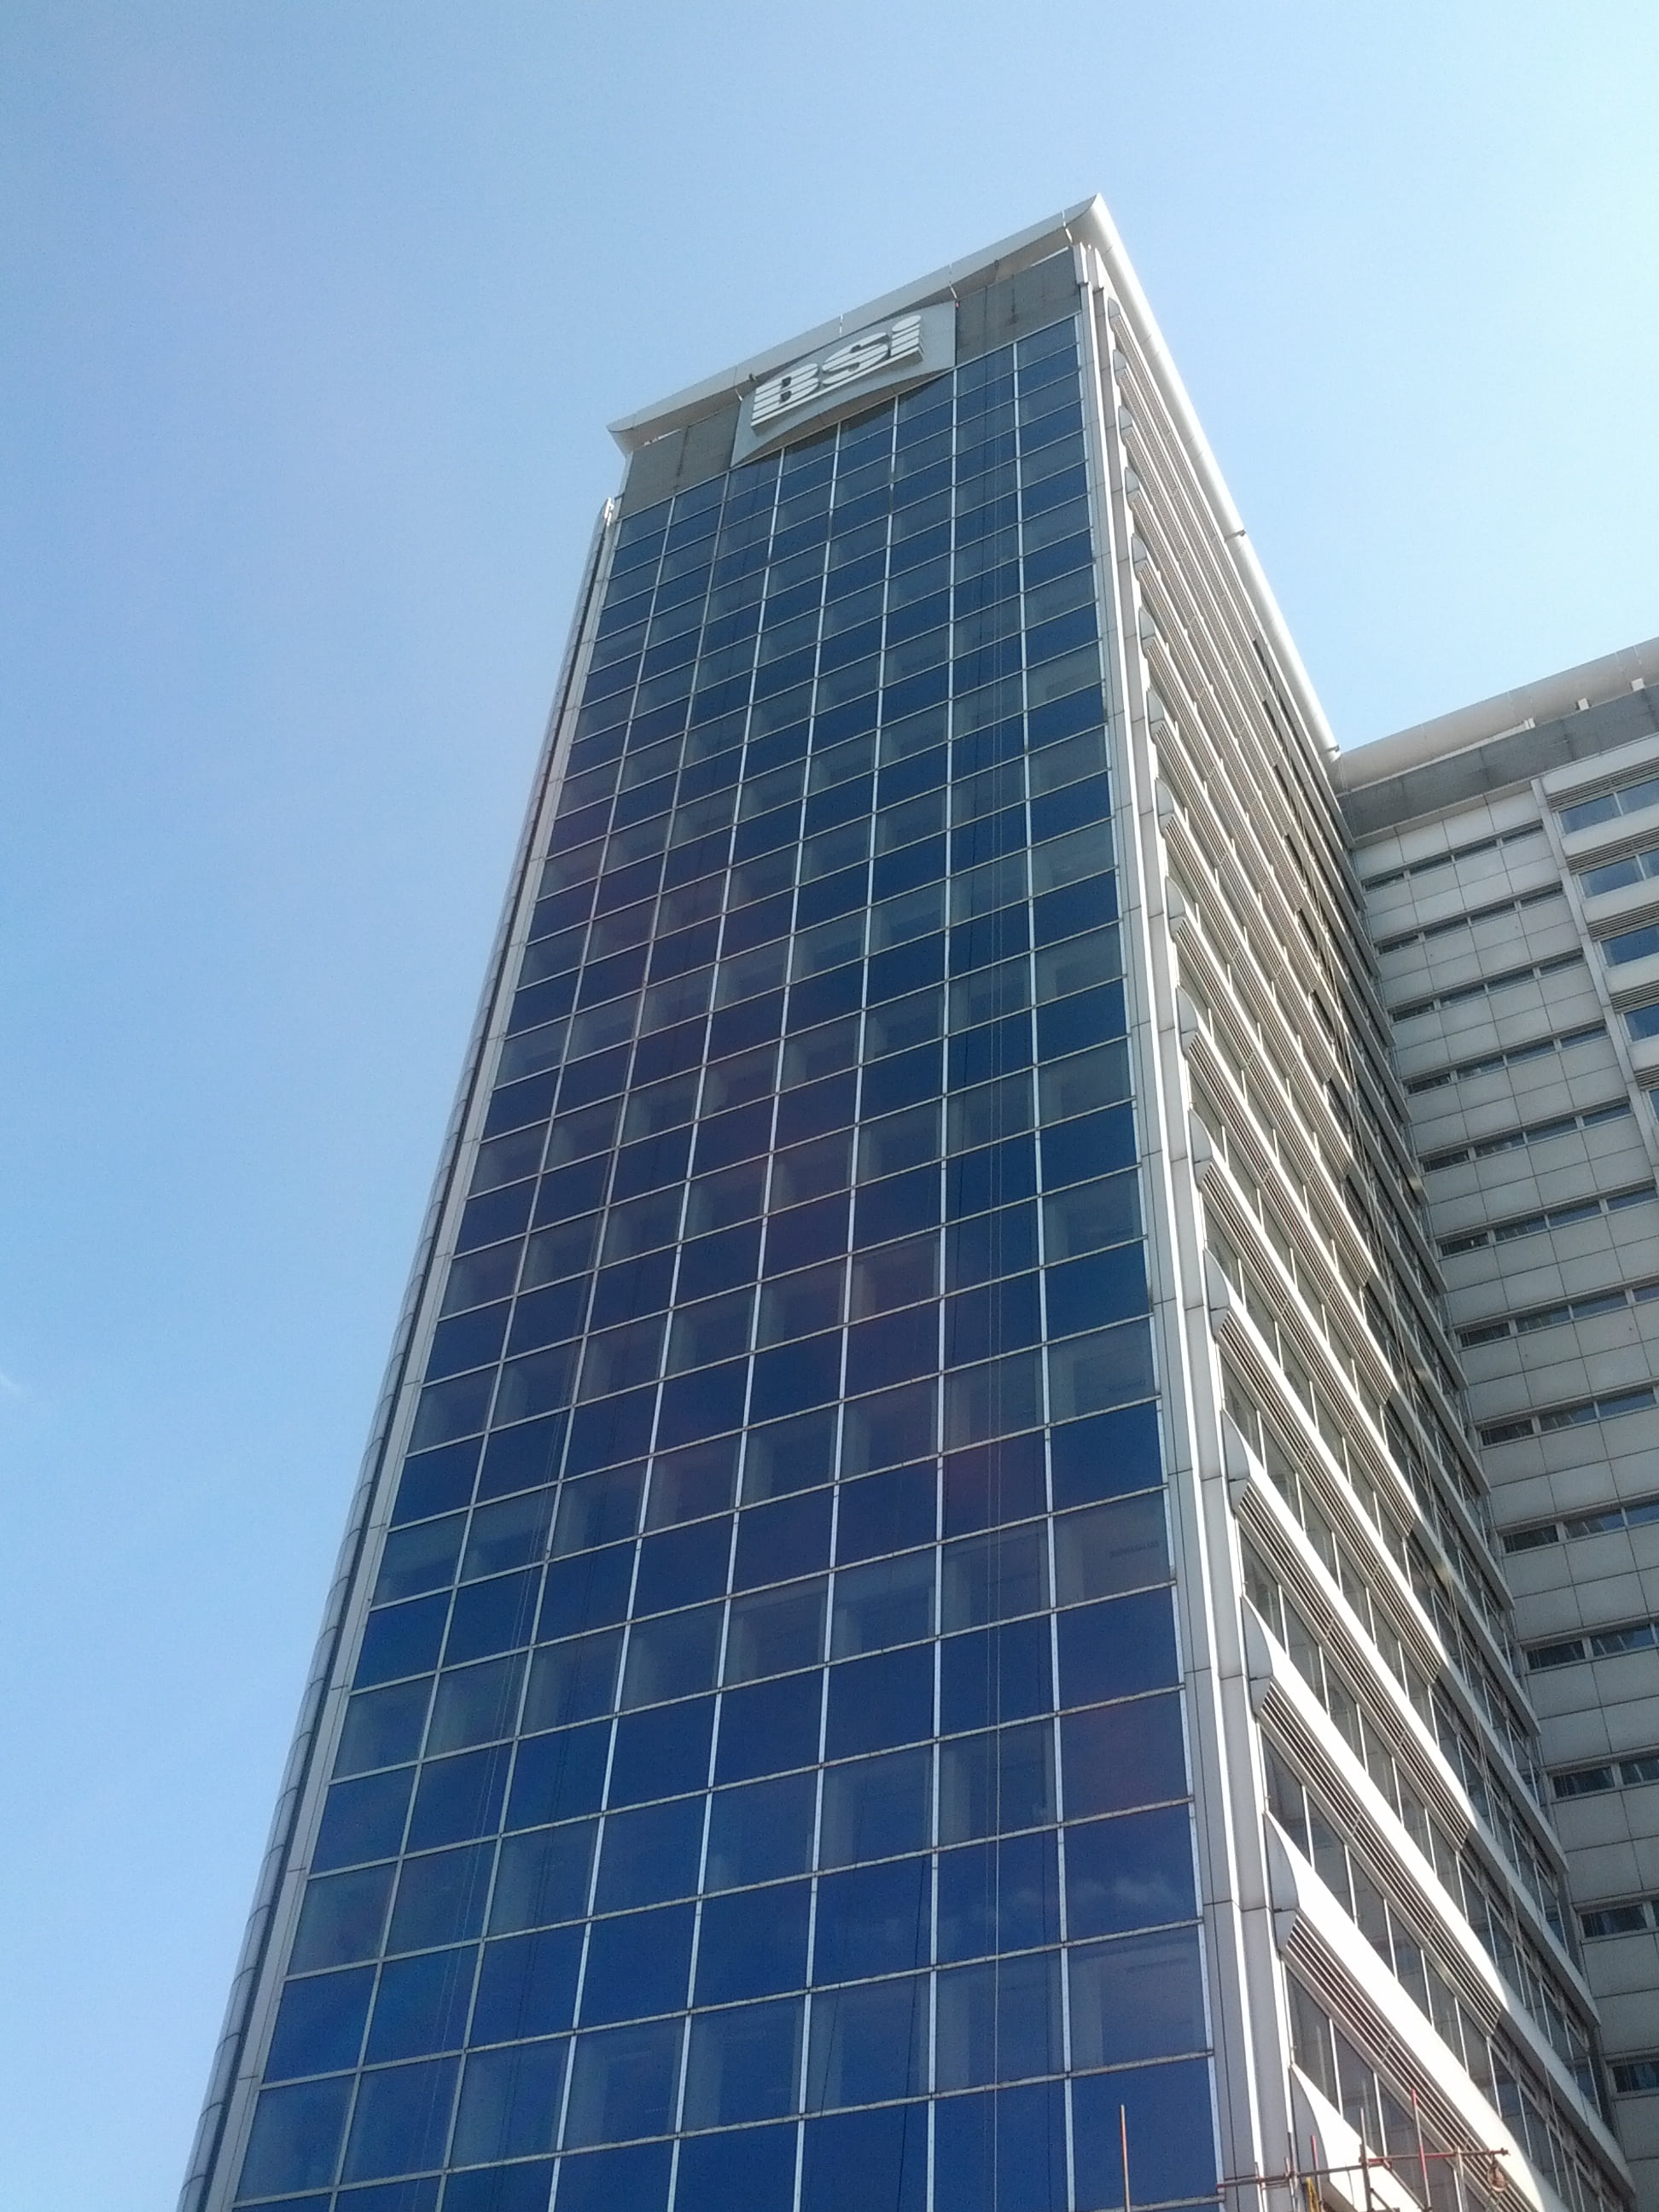 London office tower BSI